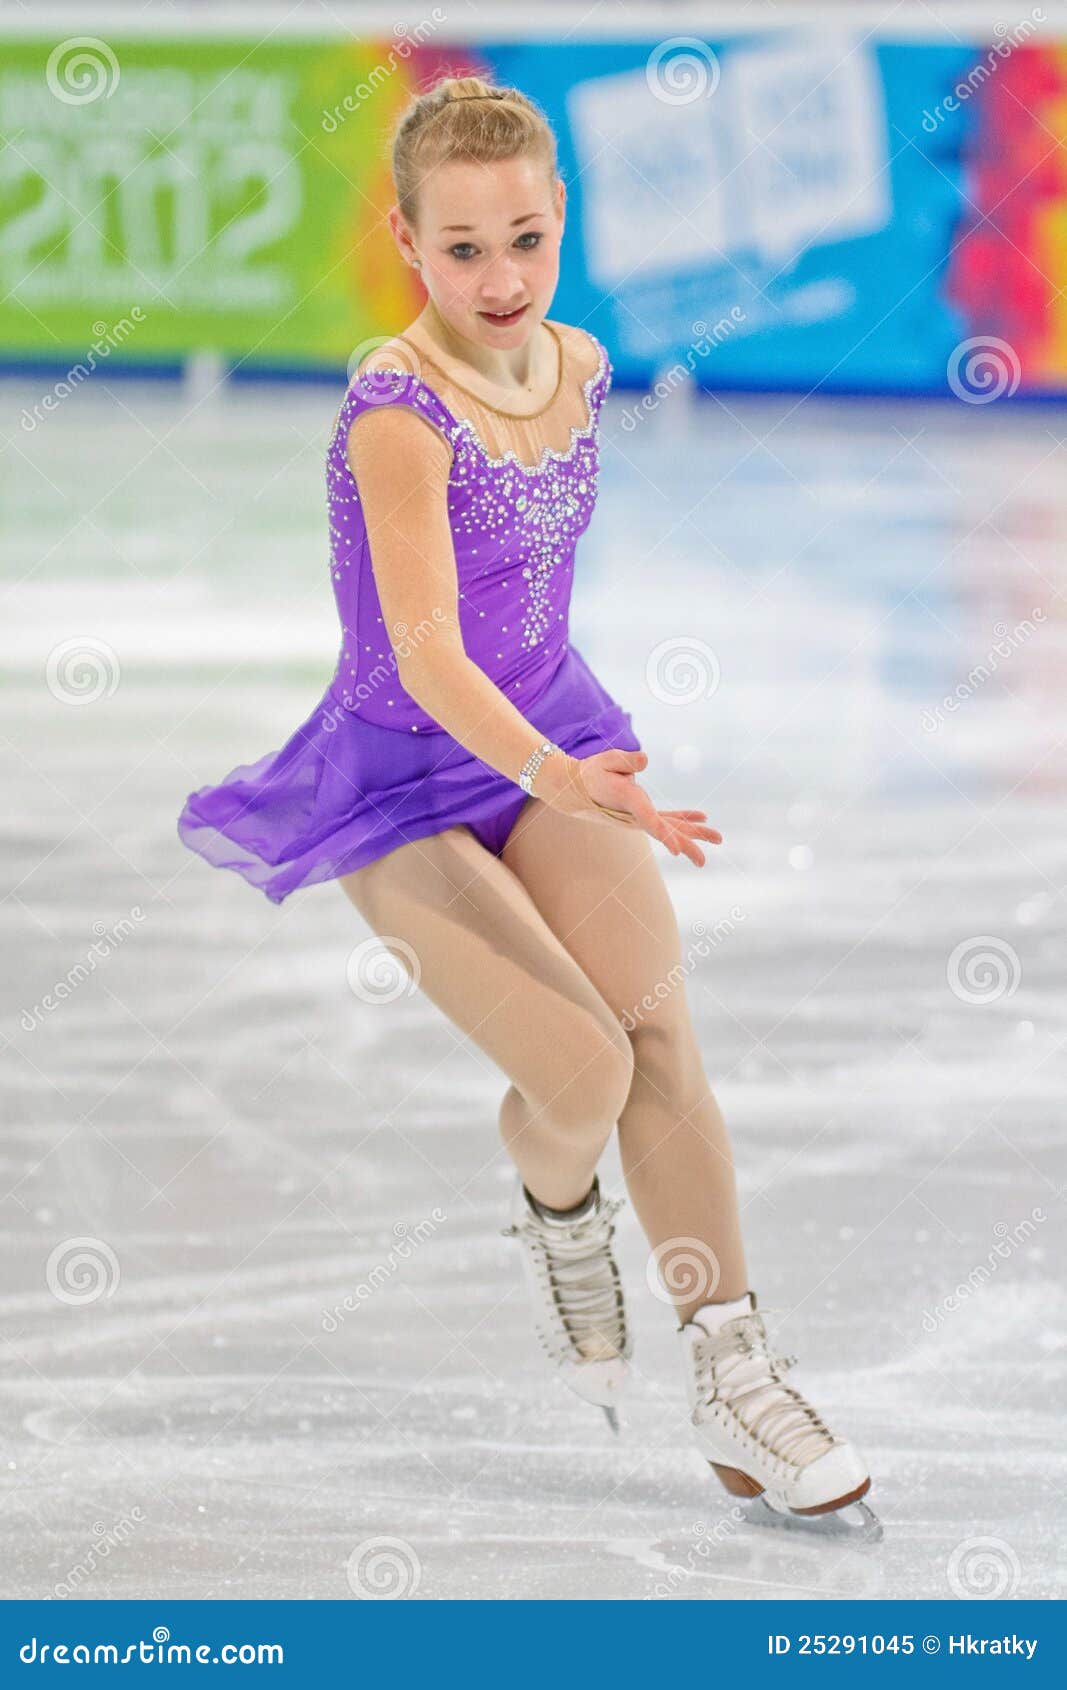 Skating leotard 3081